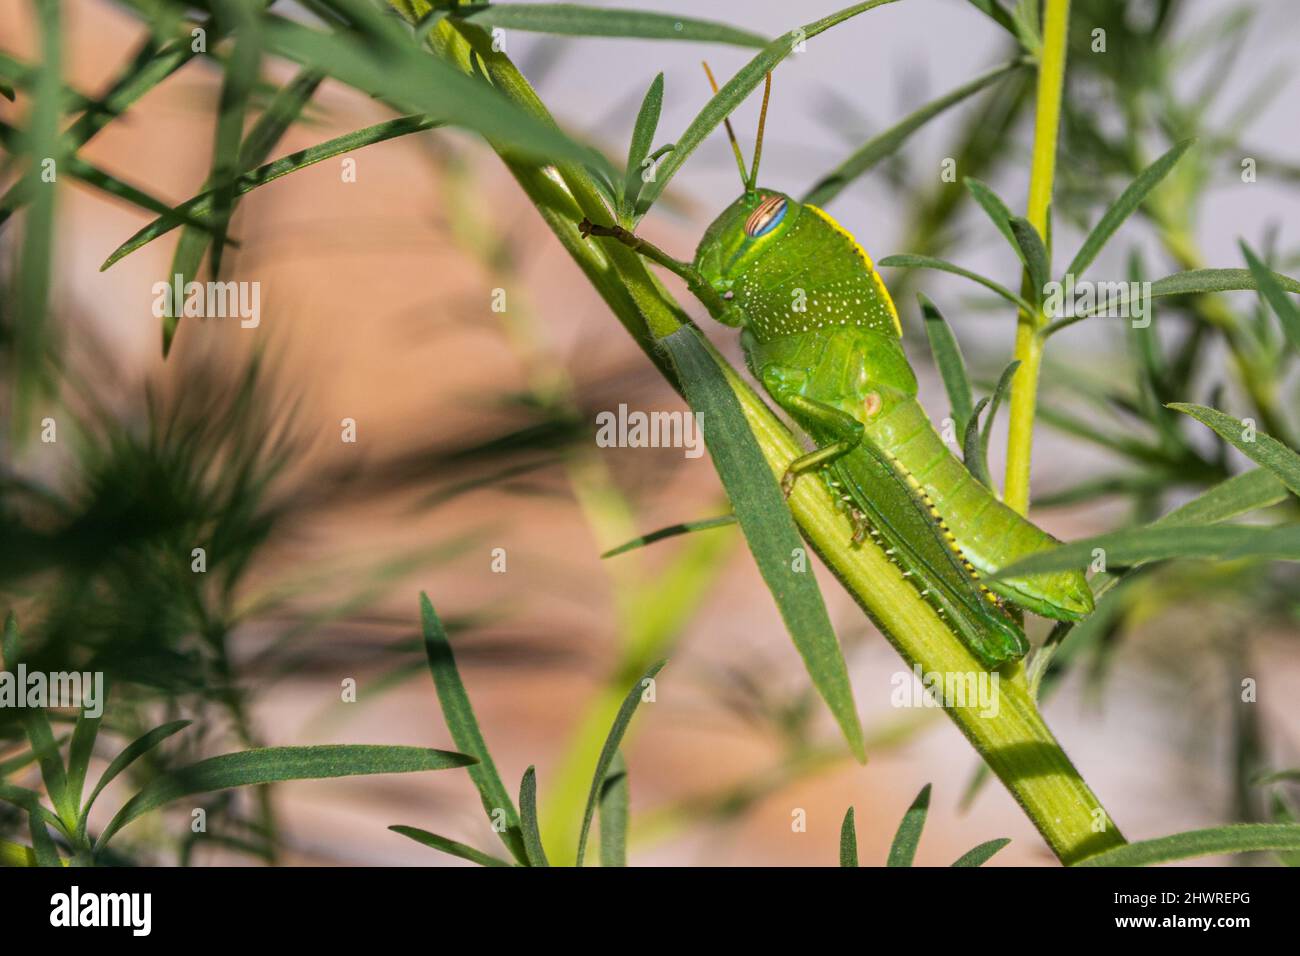 Anacridium aegyptium, Egyptian locust Climbing in a Plant Stock Photo